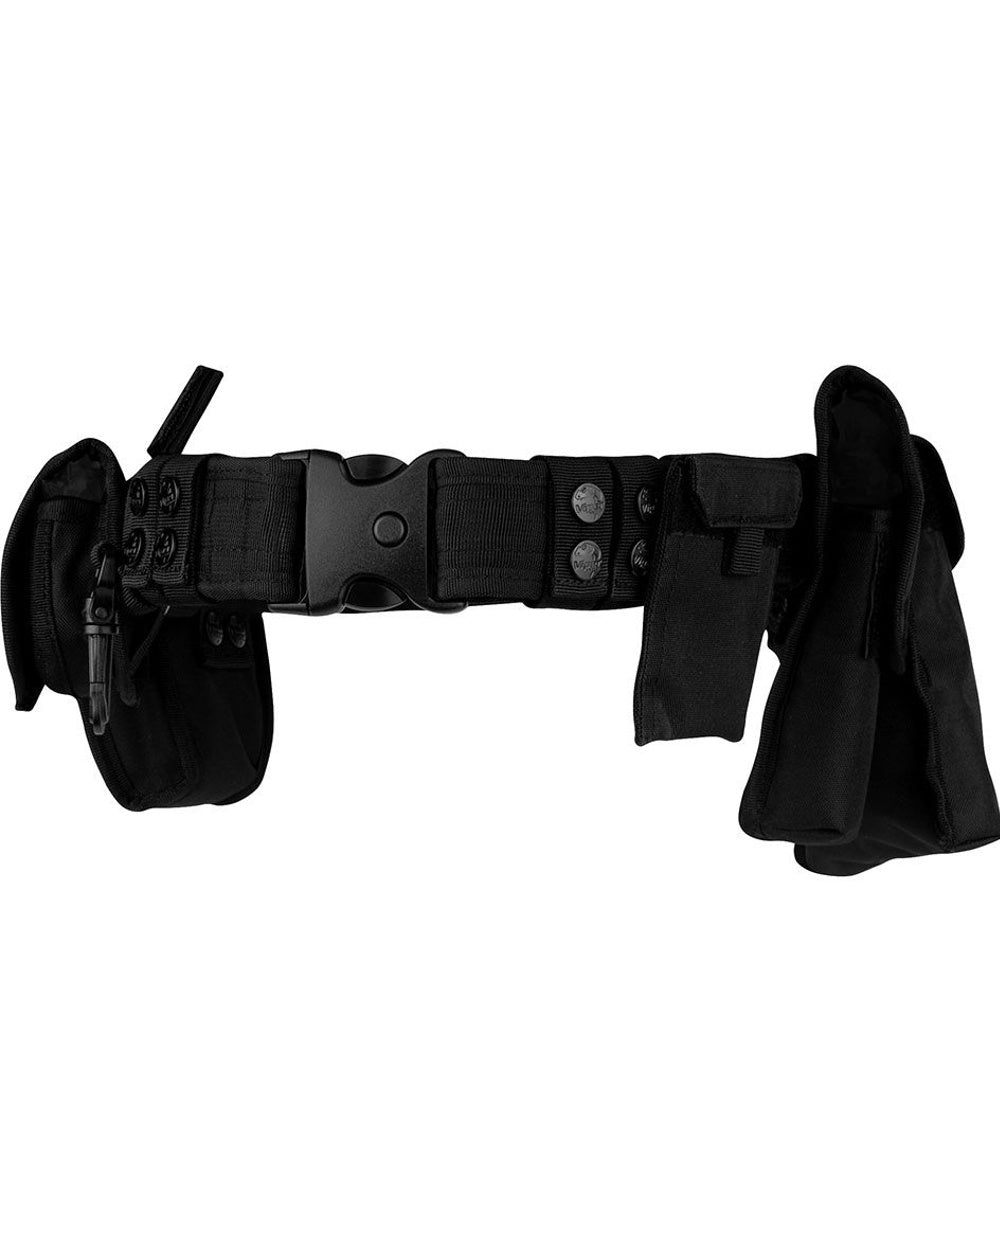 Viper Patrol Belt System In Black